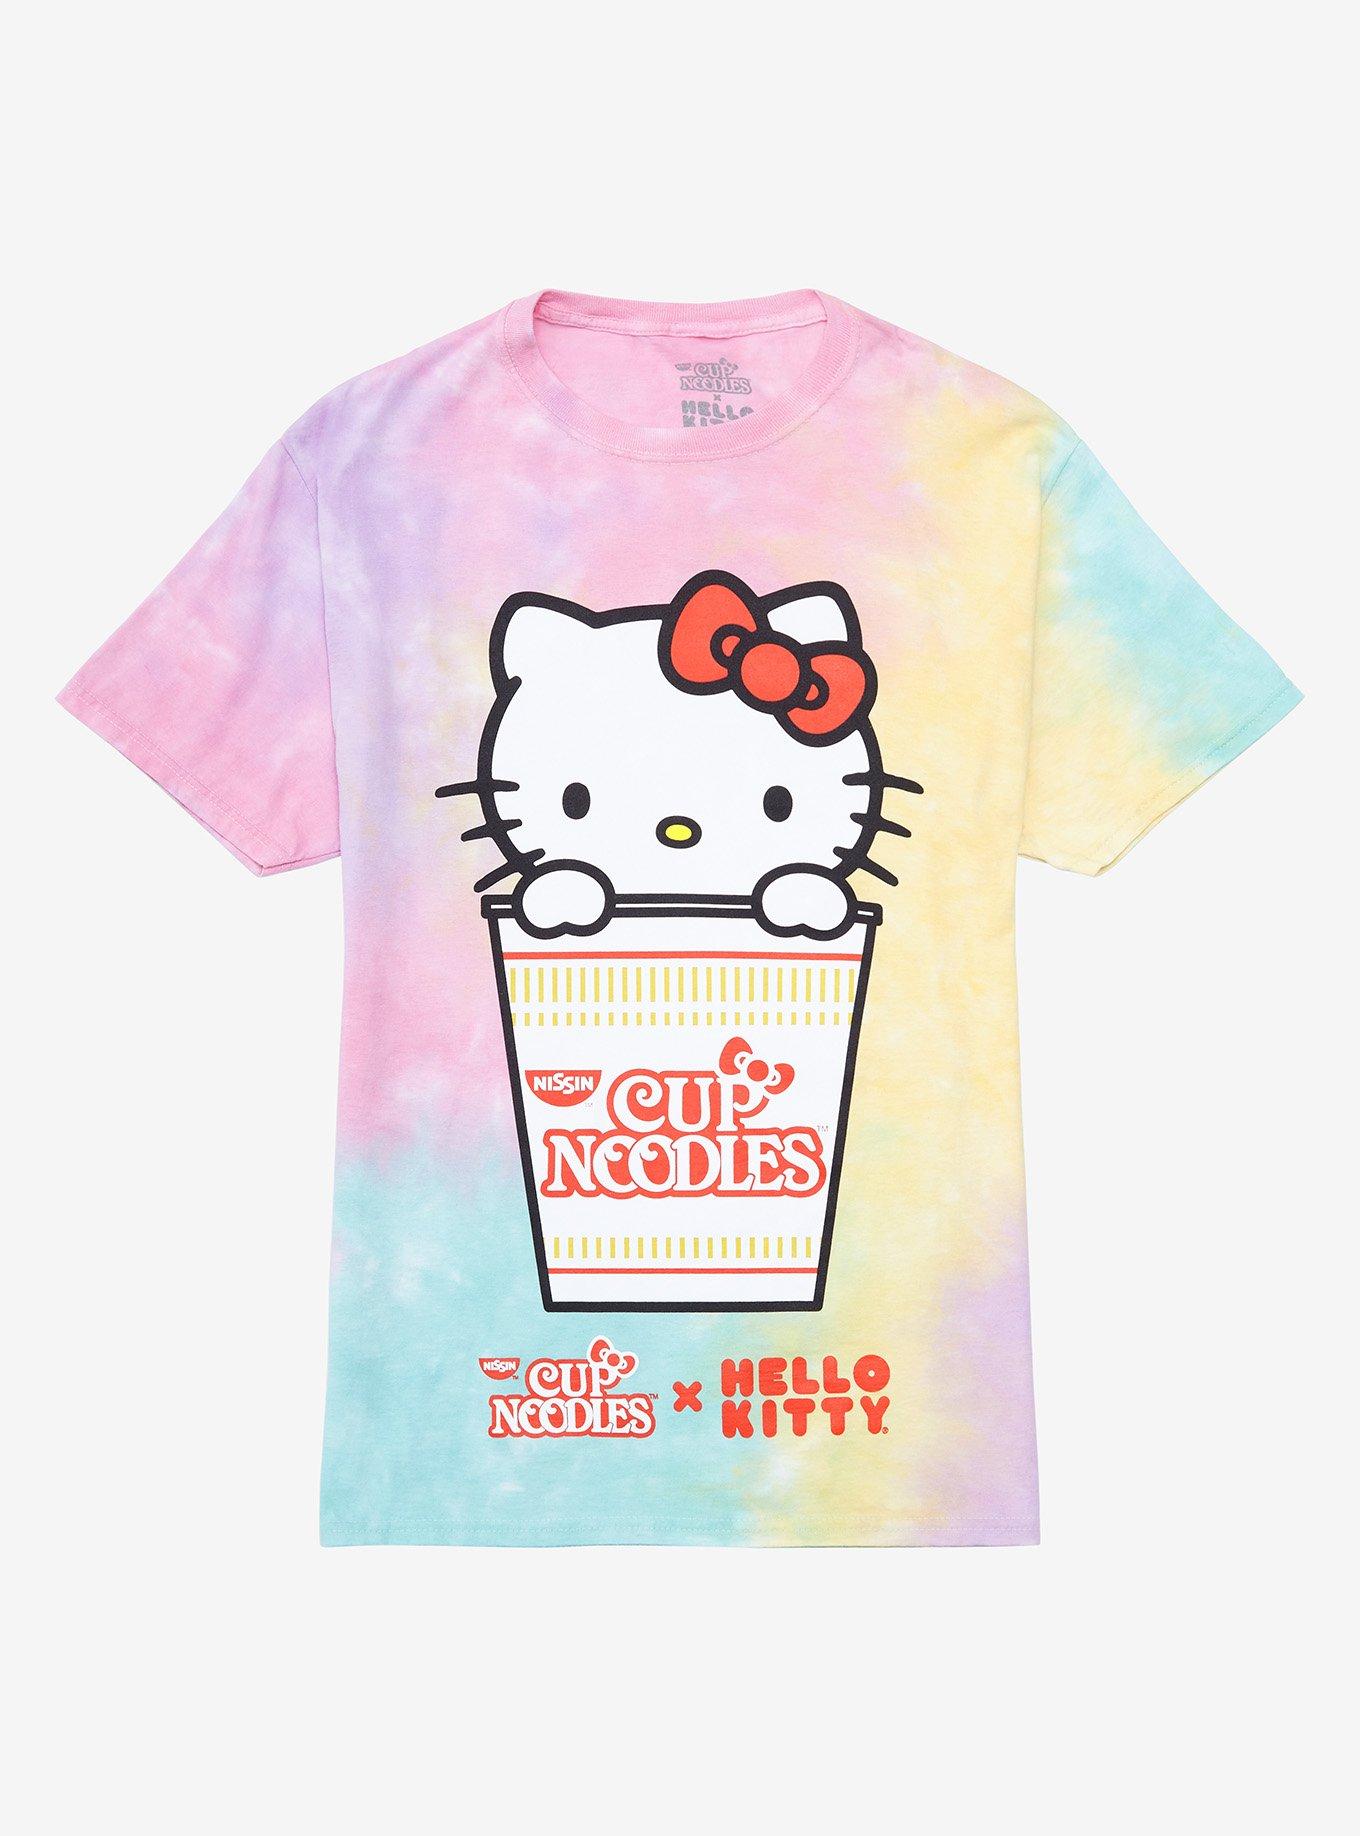 Nissin Cup Noodles X Hello Kitty Tie-Dye Boyfriend Fit Girls T-Shirt, MULTI, hi-res